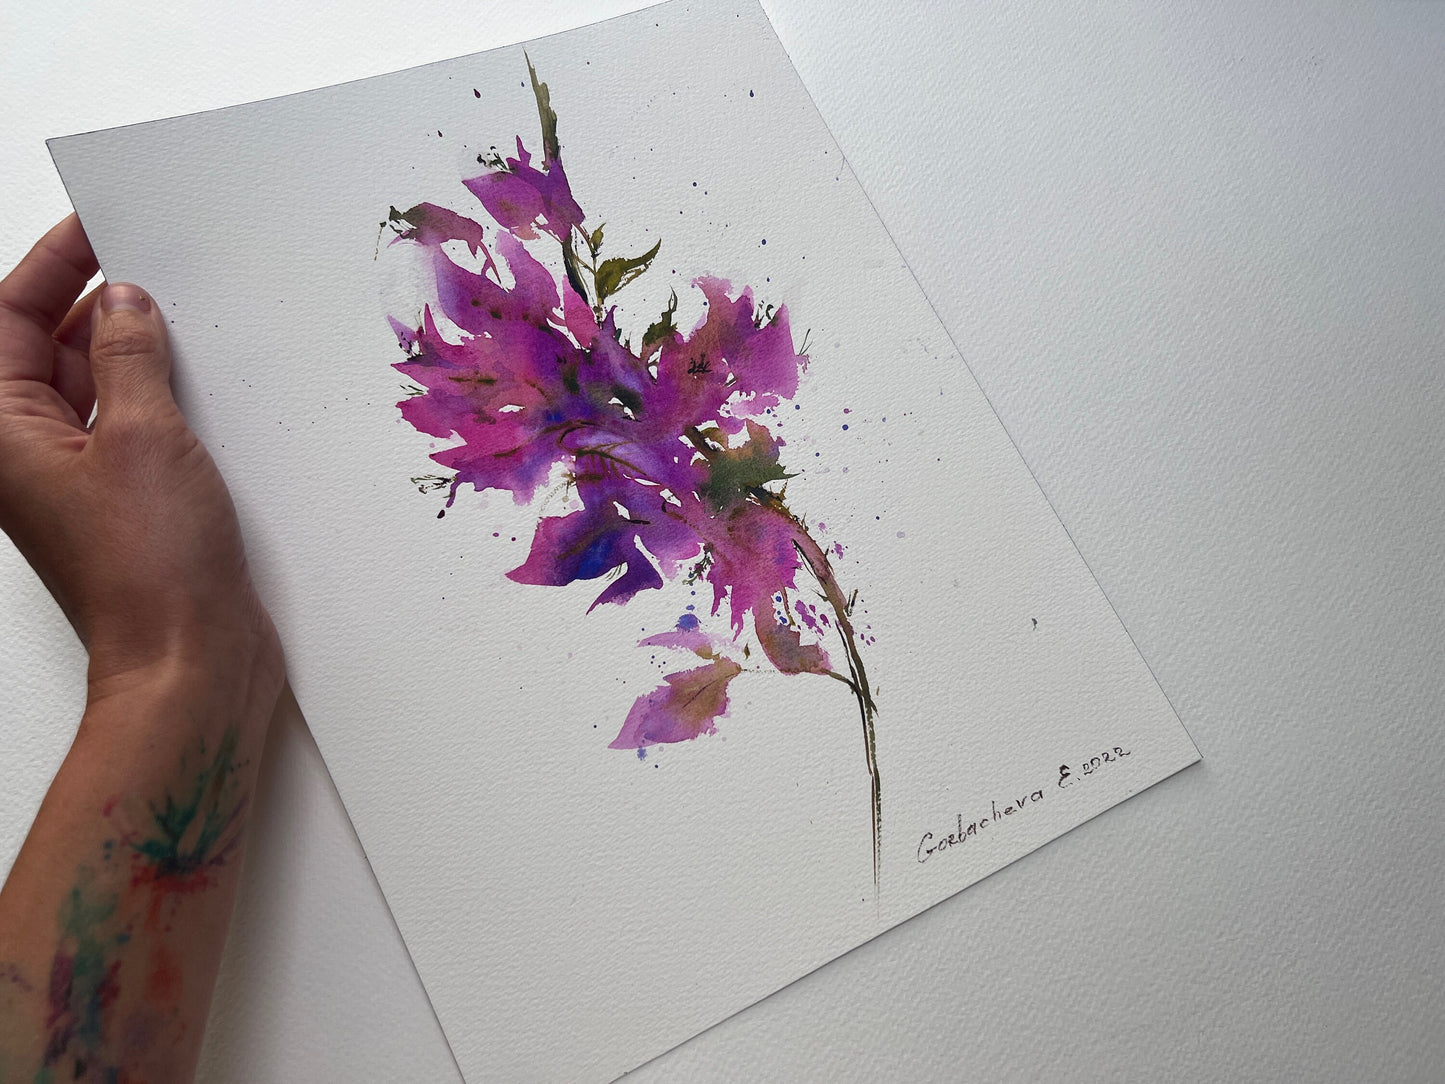 Bougainvillea Flower Painting, Original Watercolor Artwork, Purple Flowers, Botanical Art, Gift, Living Room Wall Decor